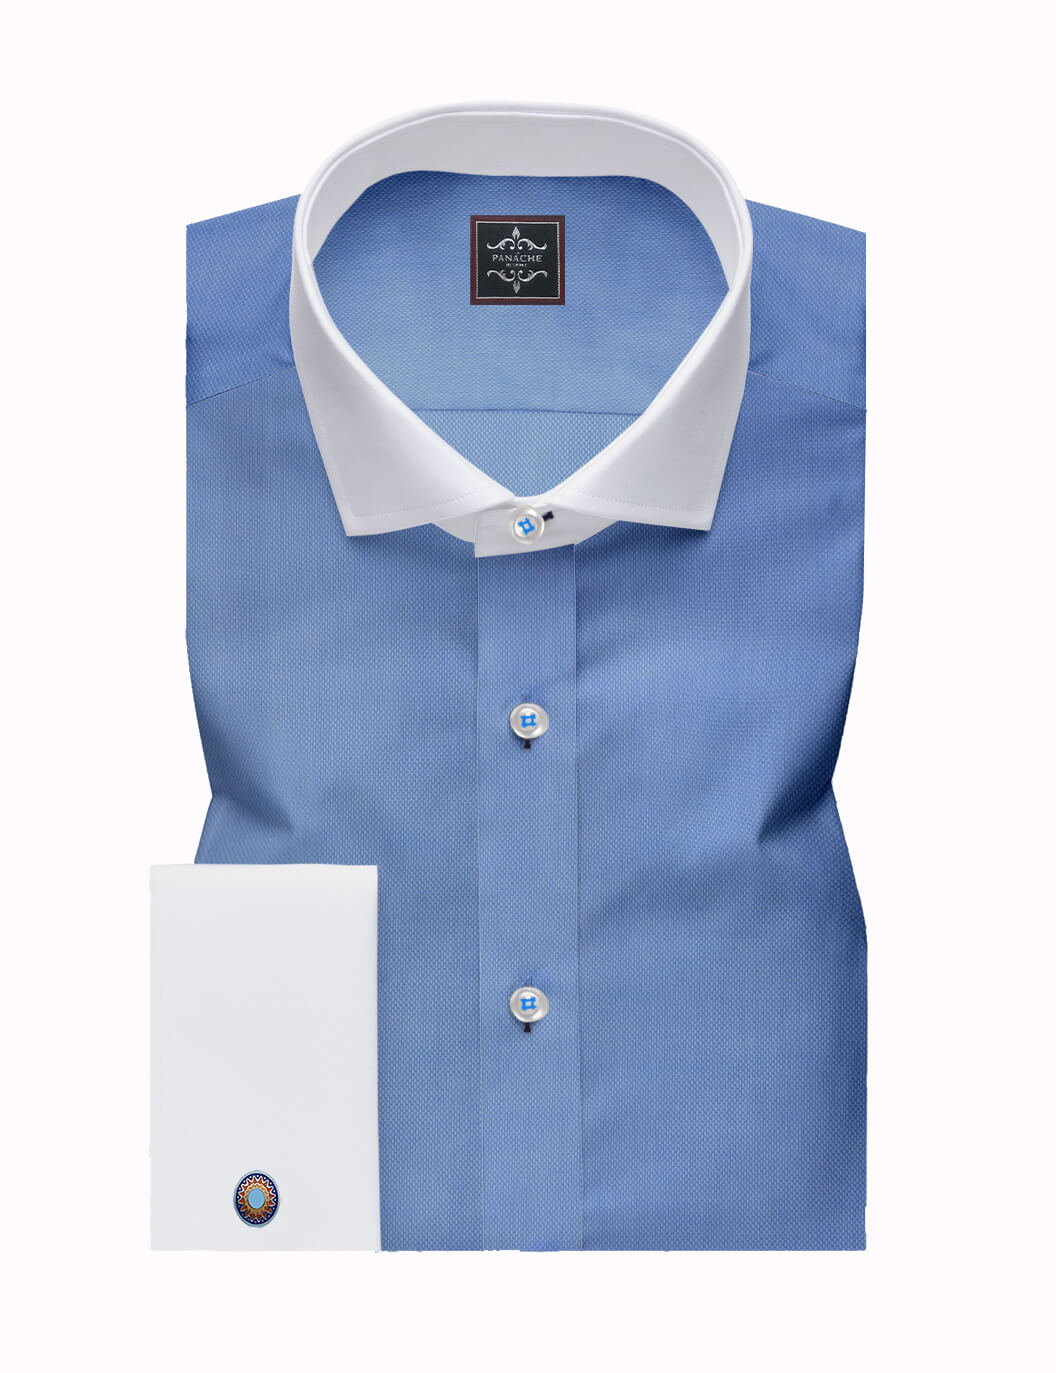 Medium Blue Oxford Shirt | White Collar Shirt Luxury 1